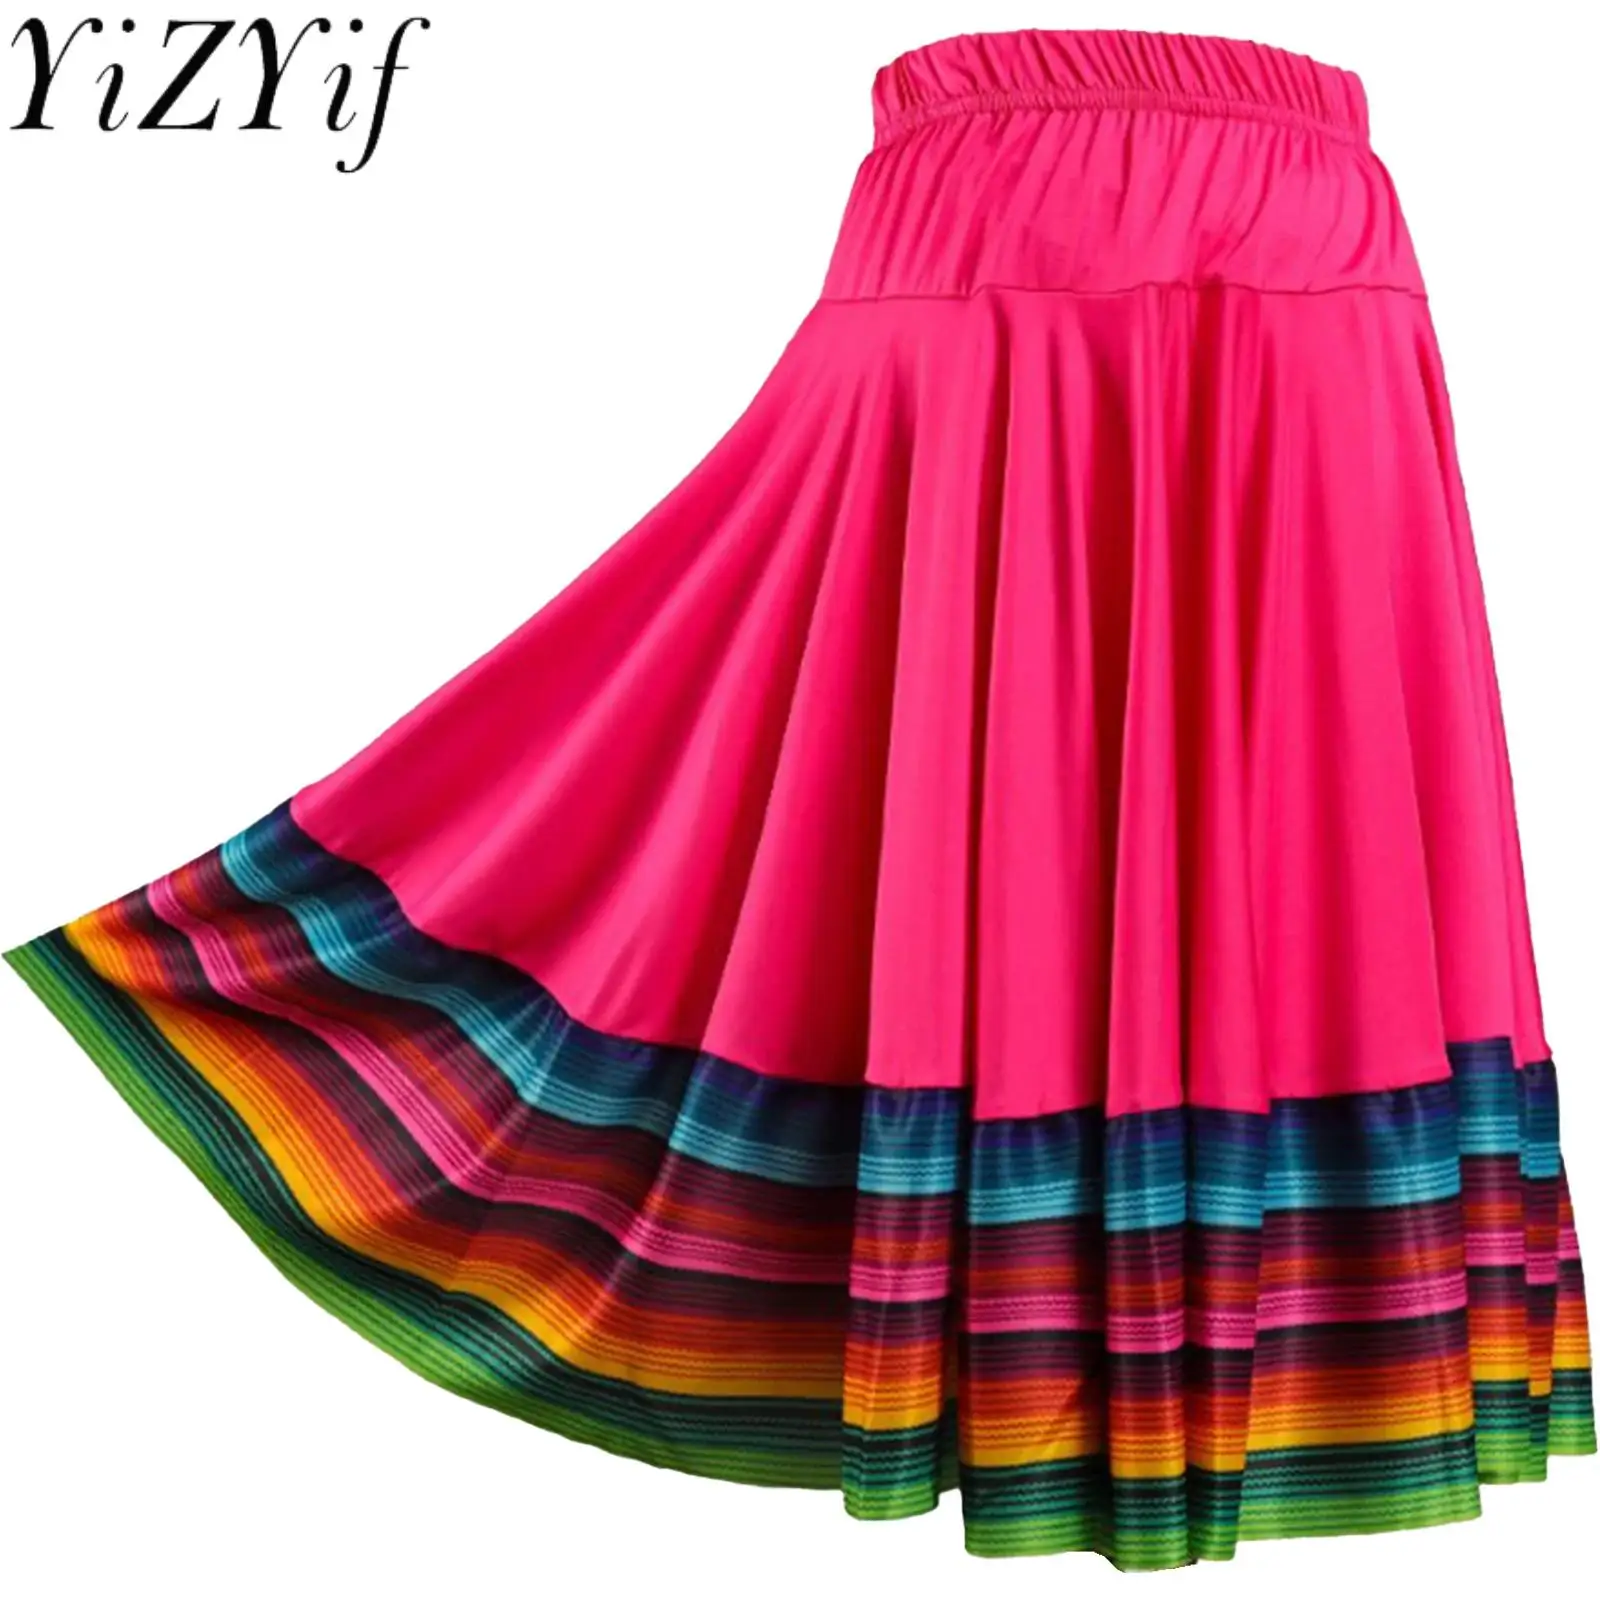 Womens Folklorico Dance Skirt Spanish Flamenco Colorful Big Swing Long Skirts Folkloric Mexican Folk Dance Performance Costume